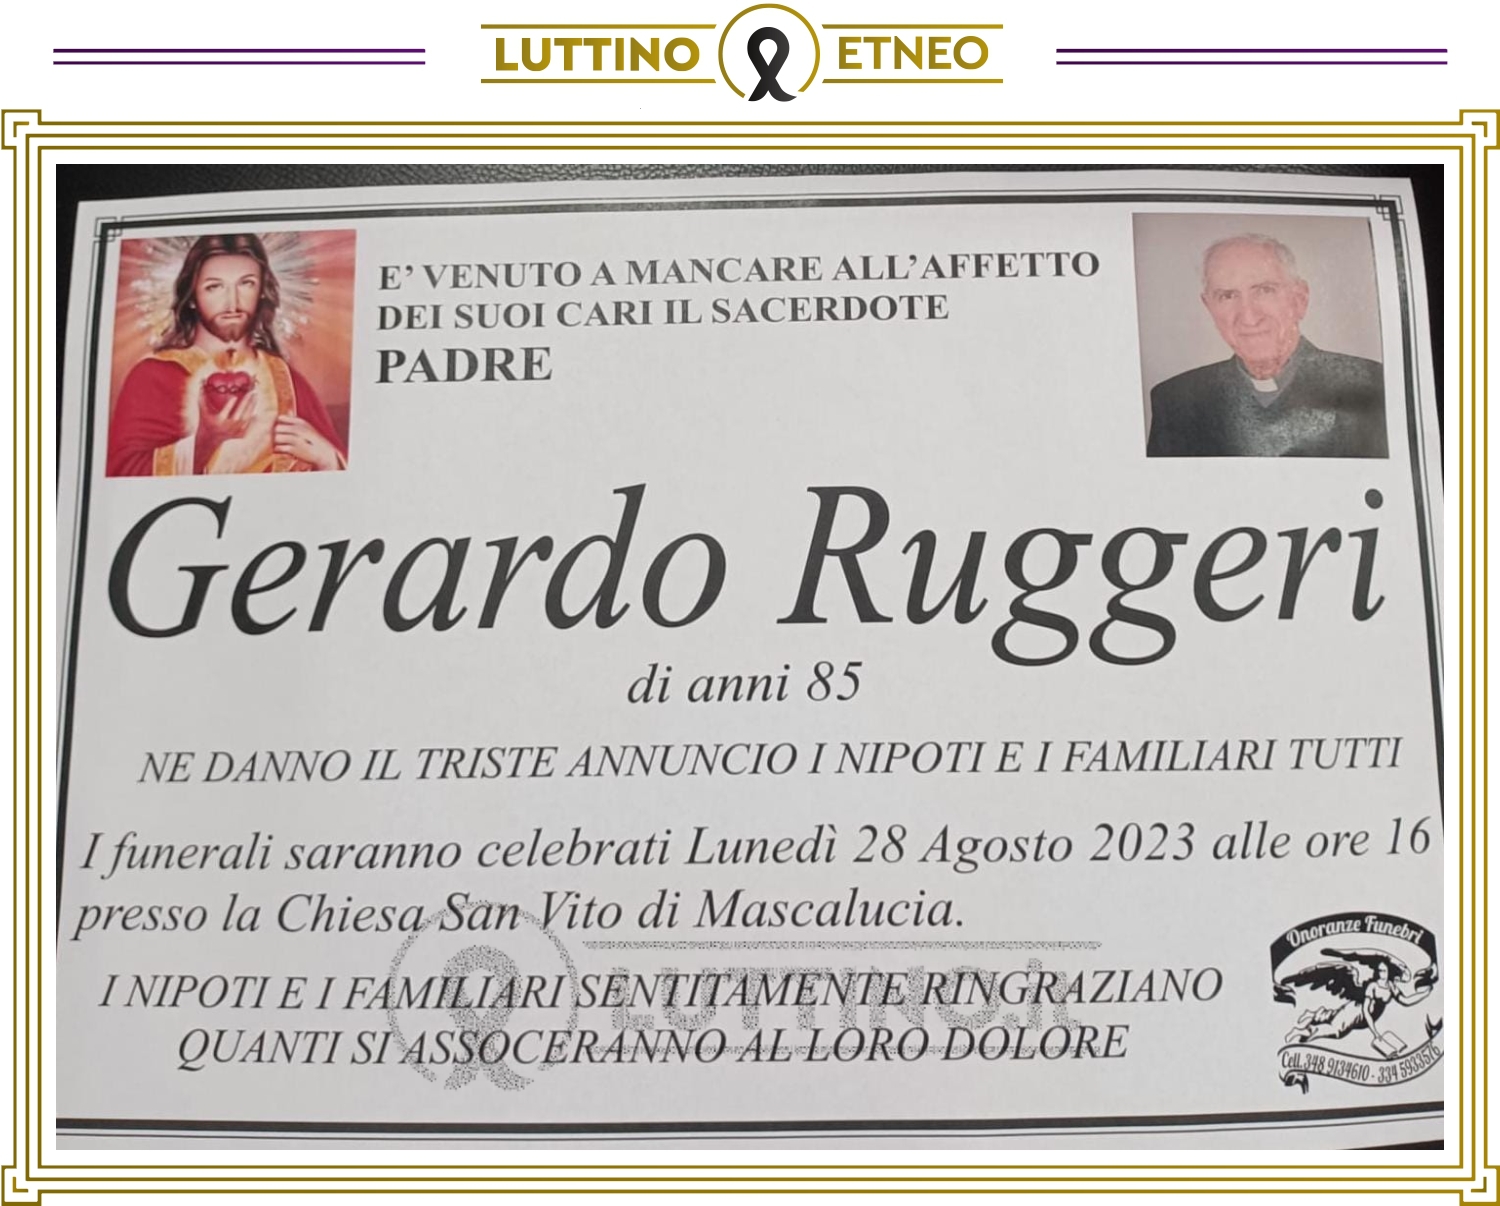 Gerardo Ruggeri